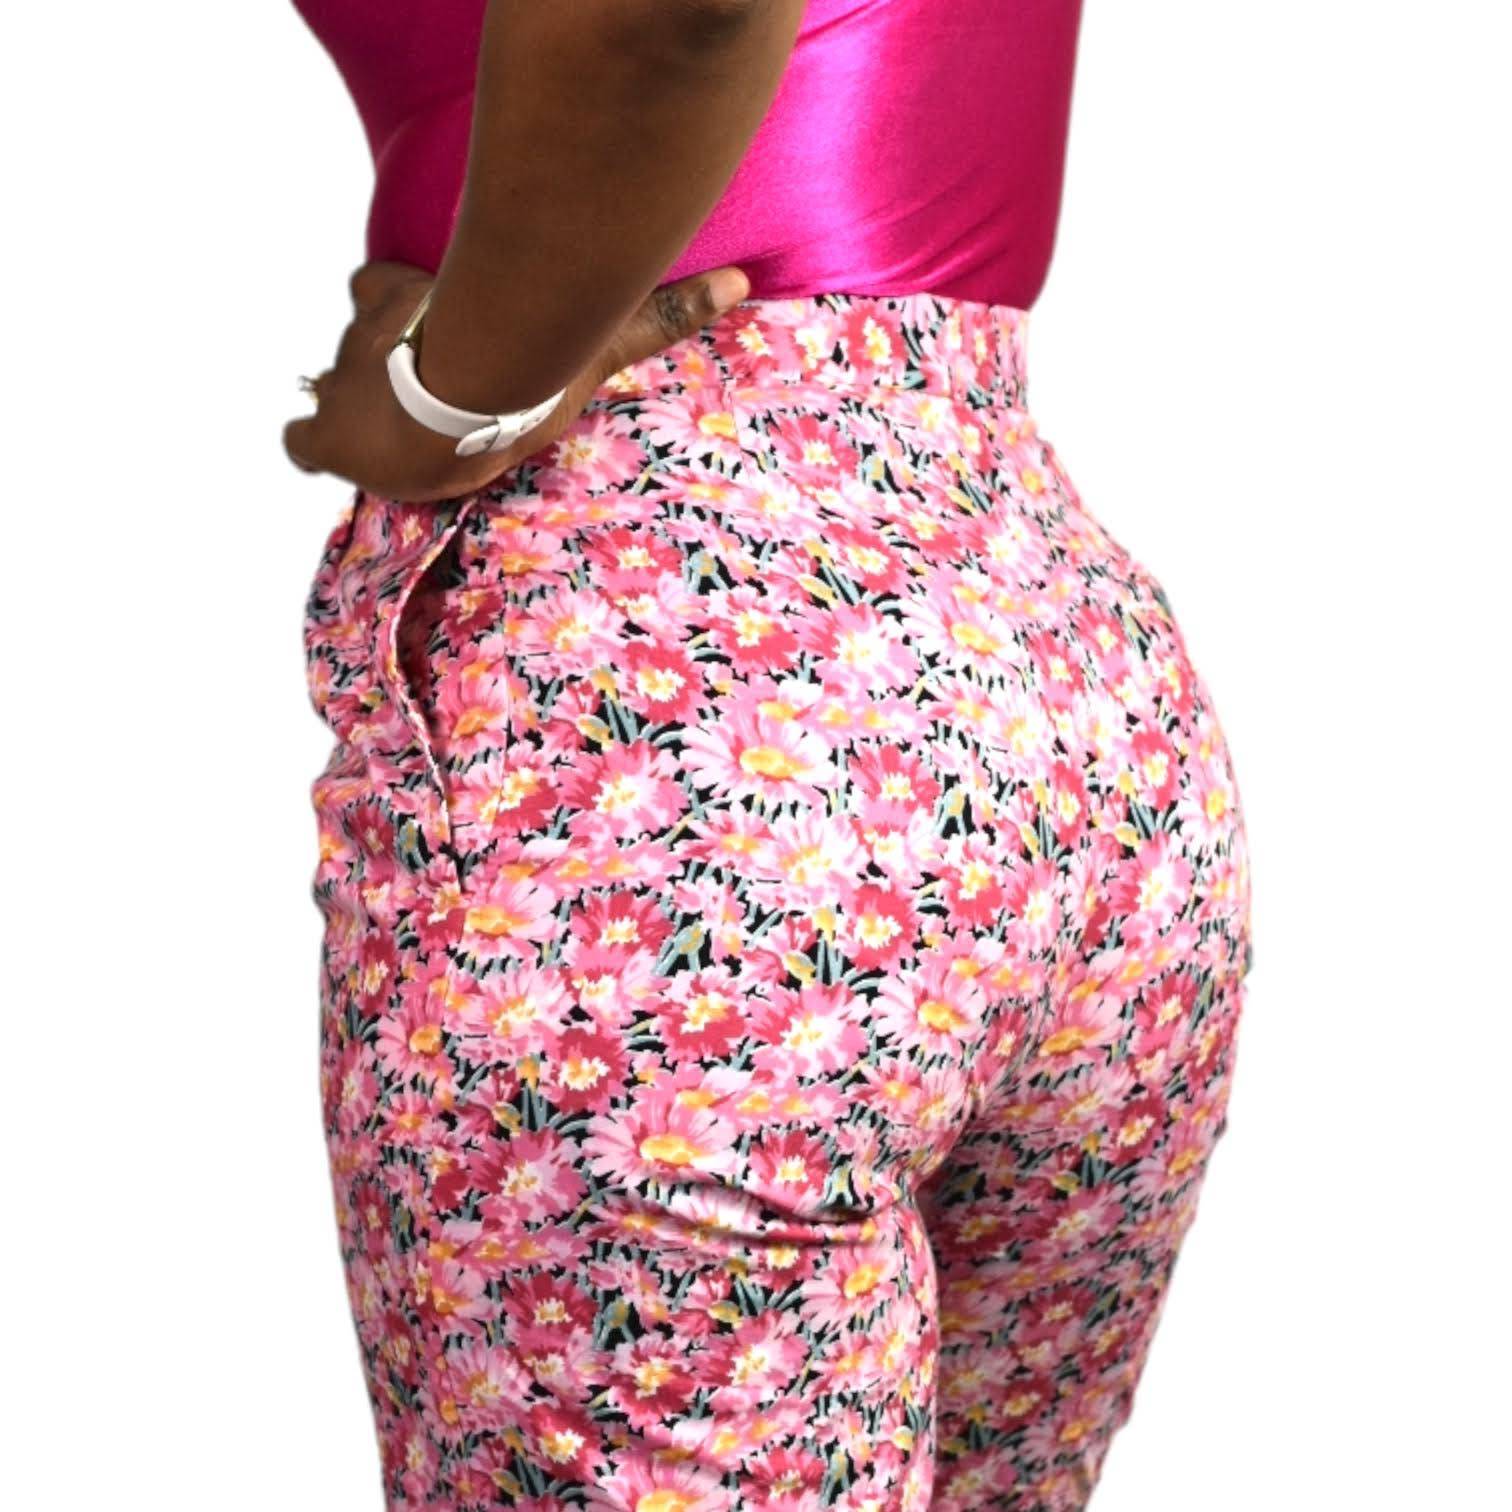 Vintage Liberty of London Floral Shorts Pink Bermuda Walking Long Cotton Size 2